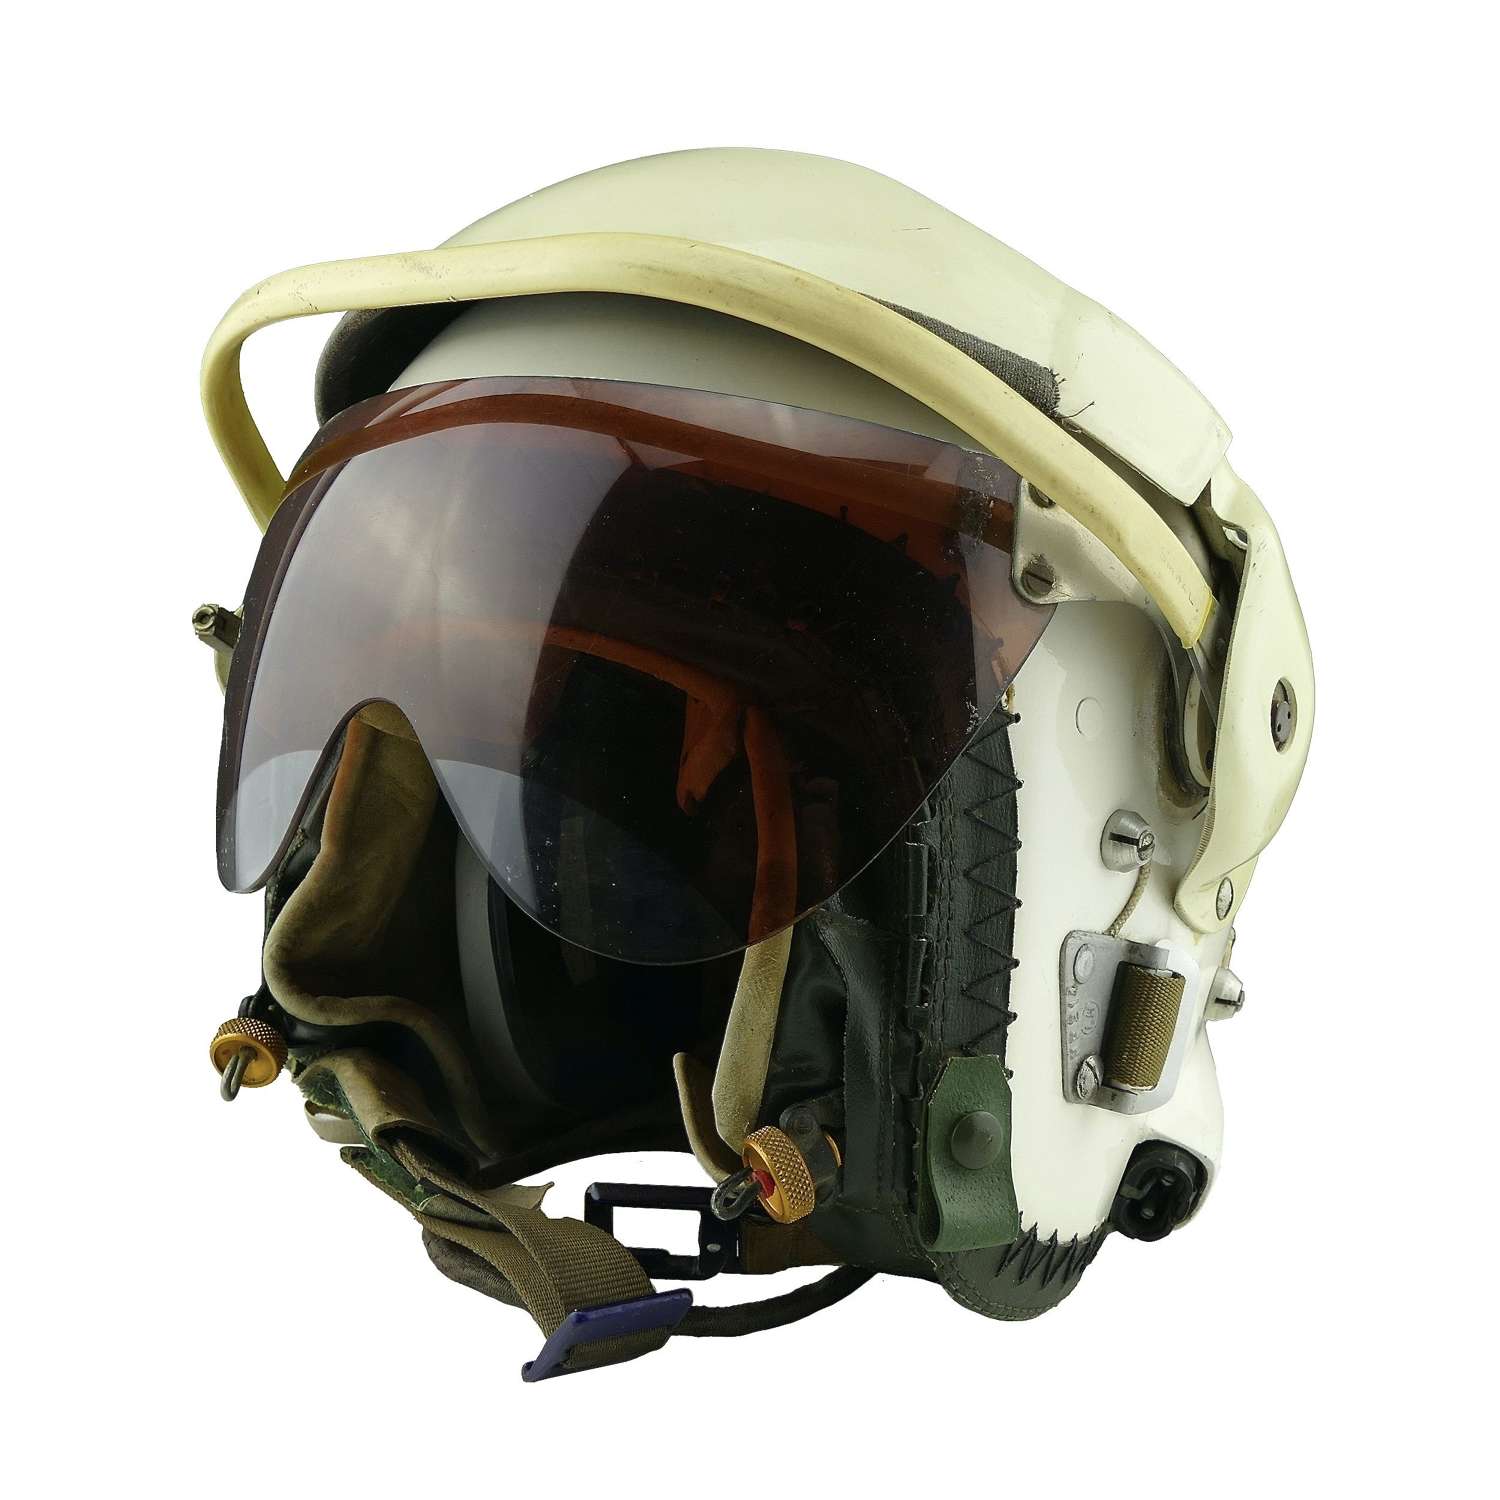 RAF Mk.2A flying helmet, cased